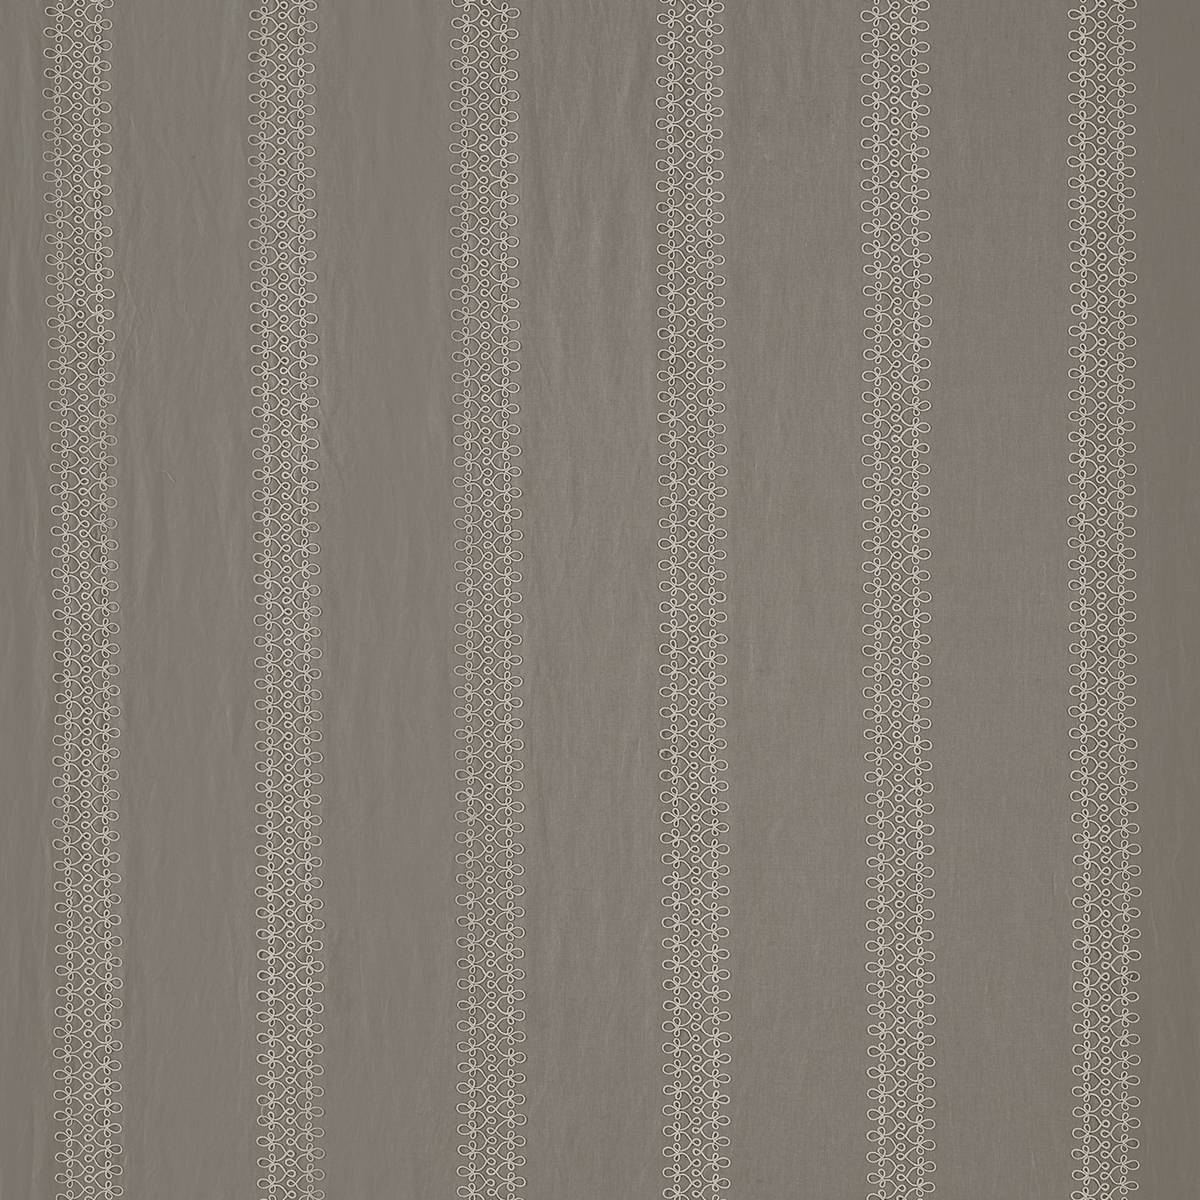 Burnett Stripe Fig Fabric by Sanderson